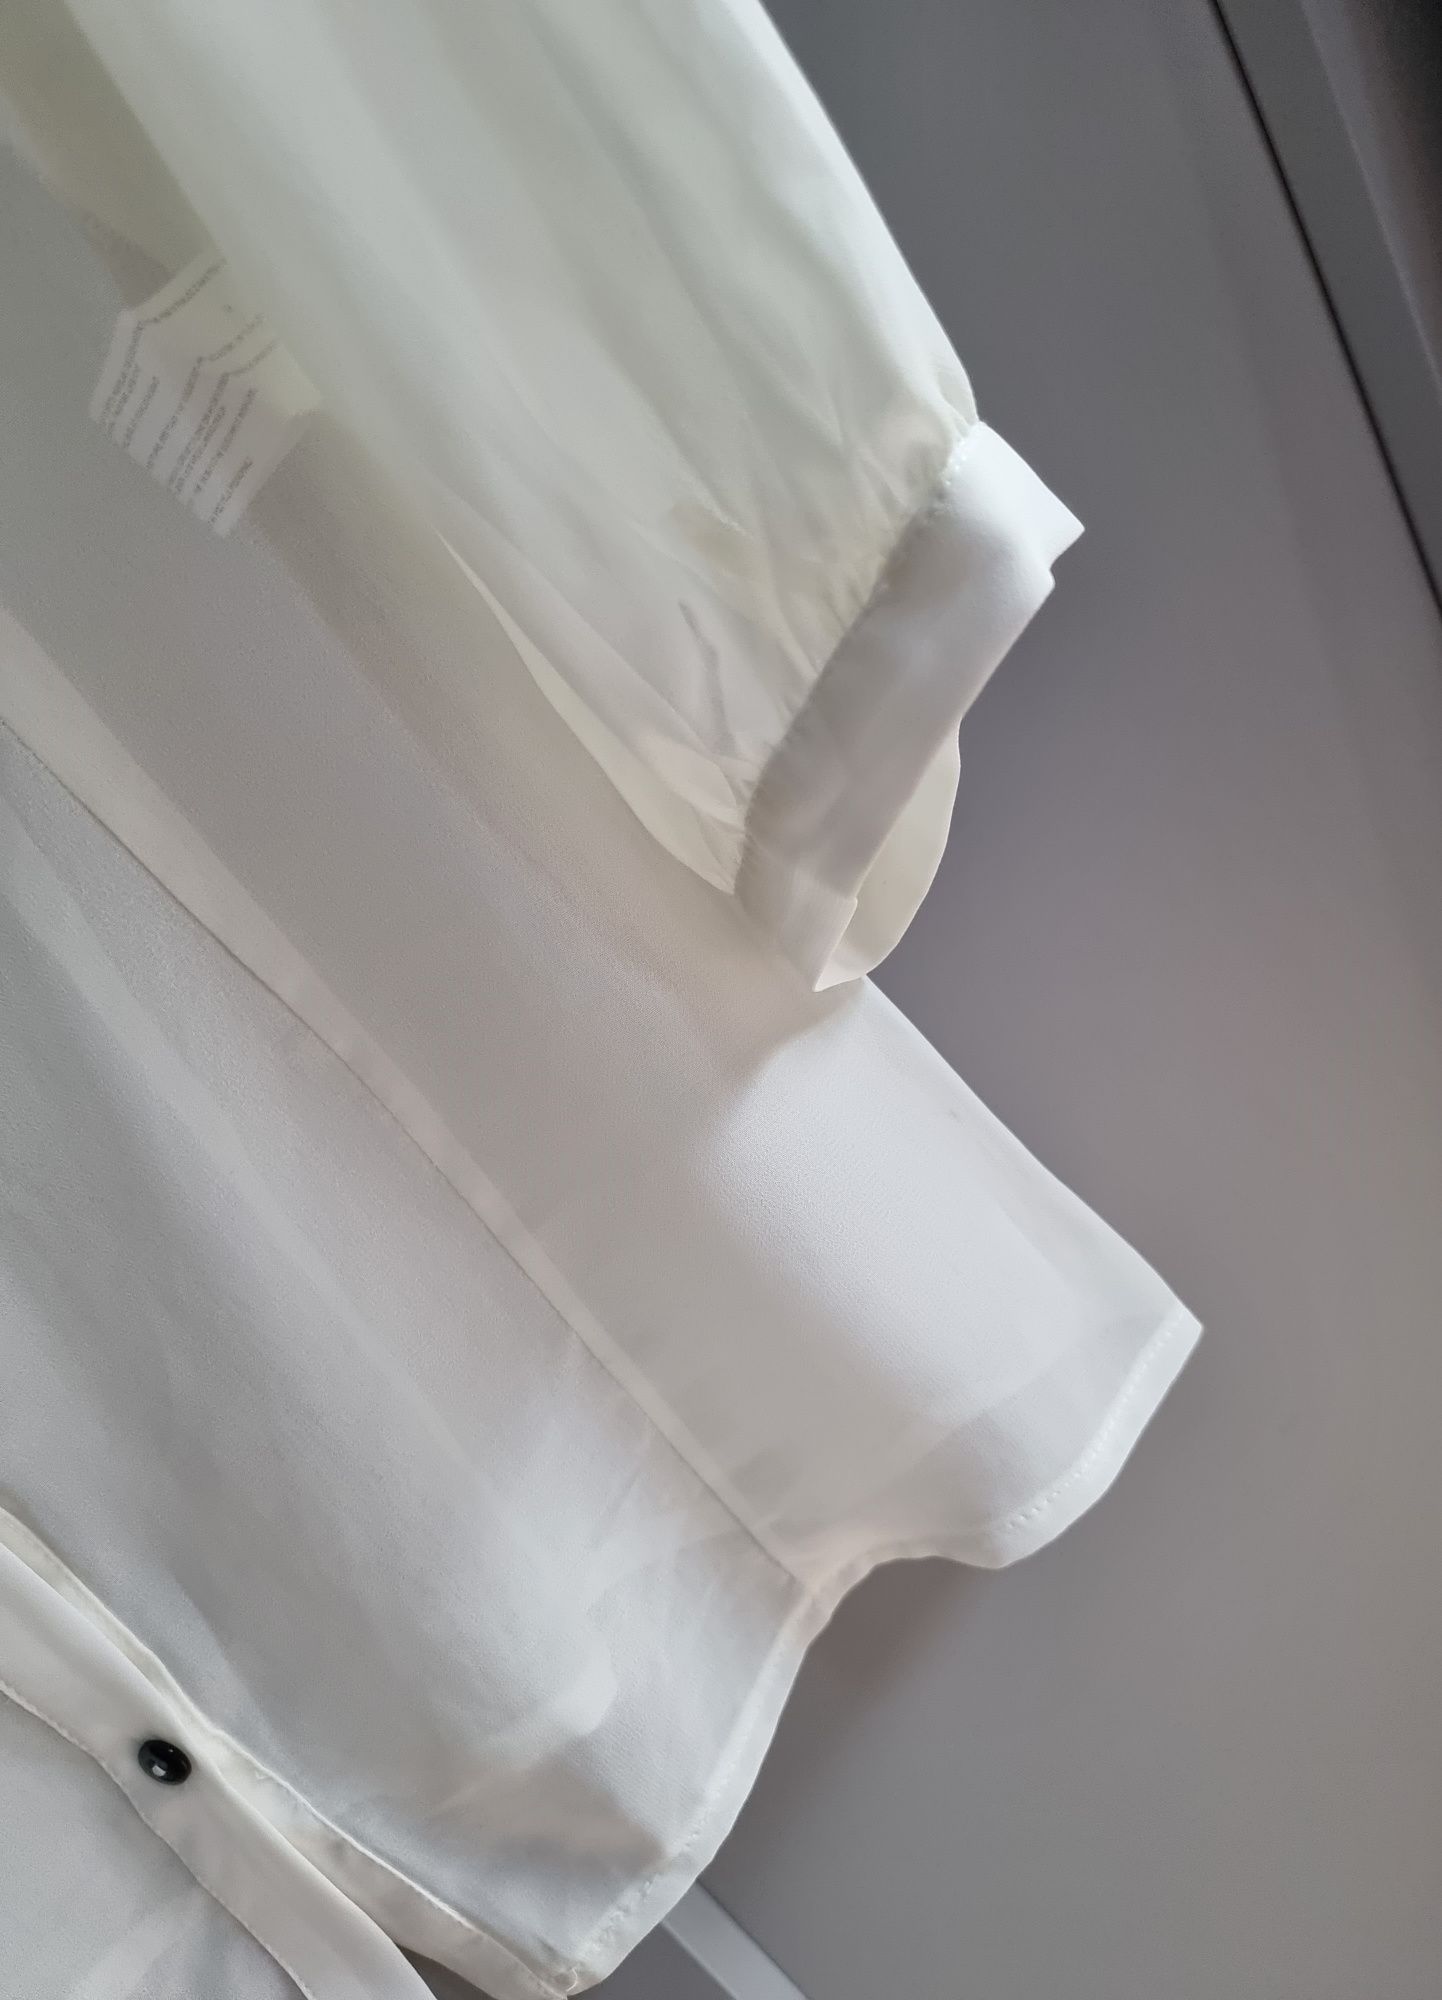 Nowa biała bluzka koszulowa elegancka żabot Mohito roz 36 S